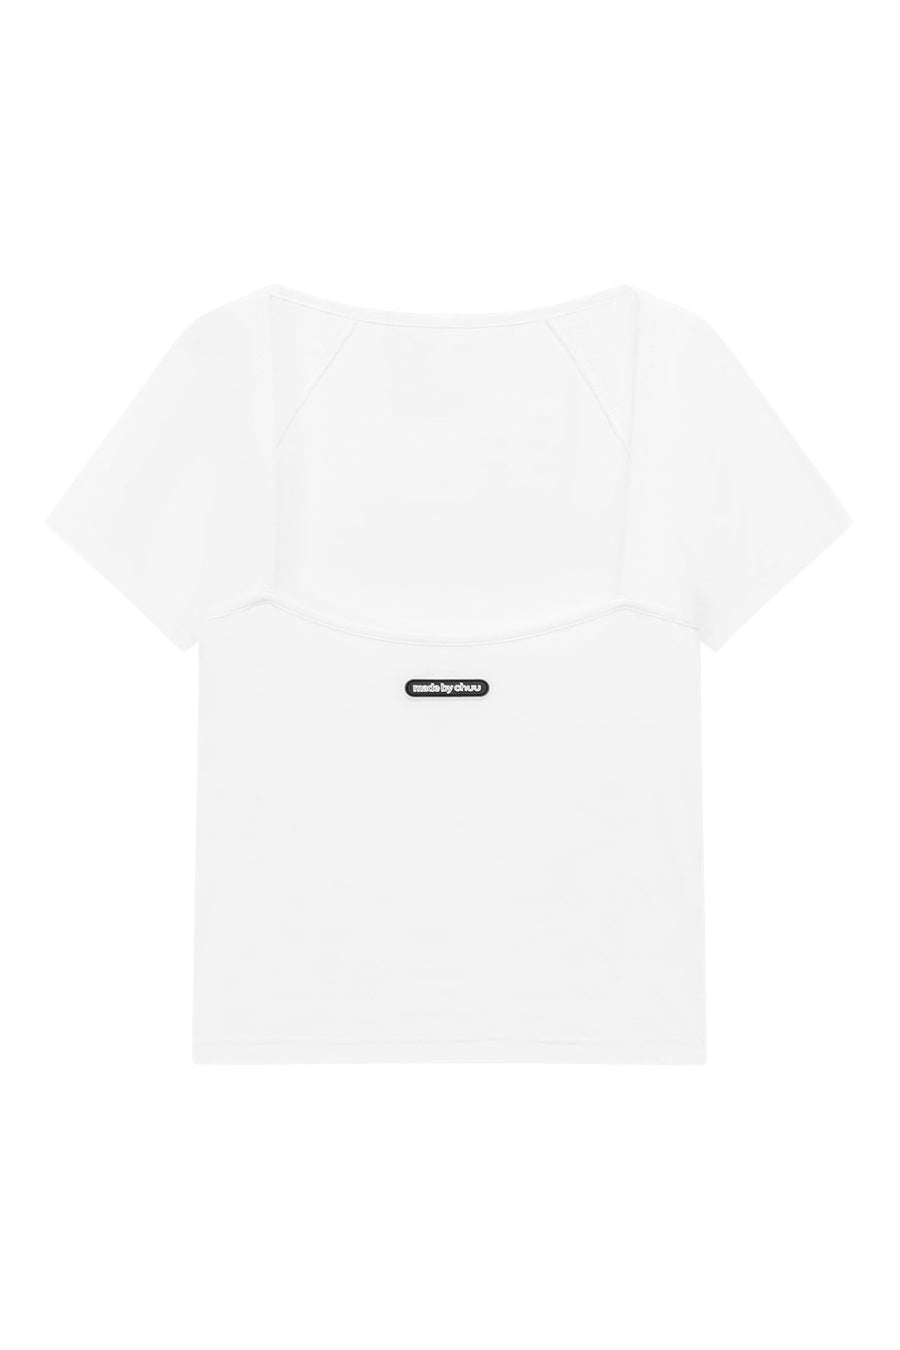 CHUU Slim Square Neck T-Shirt